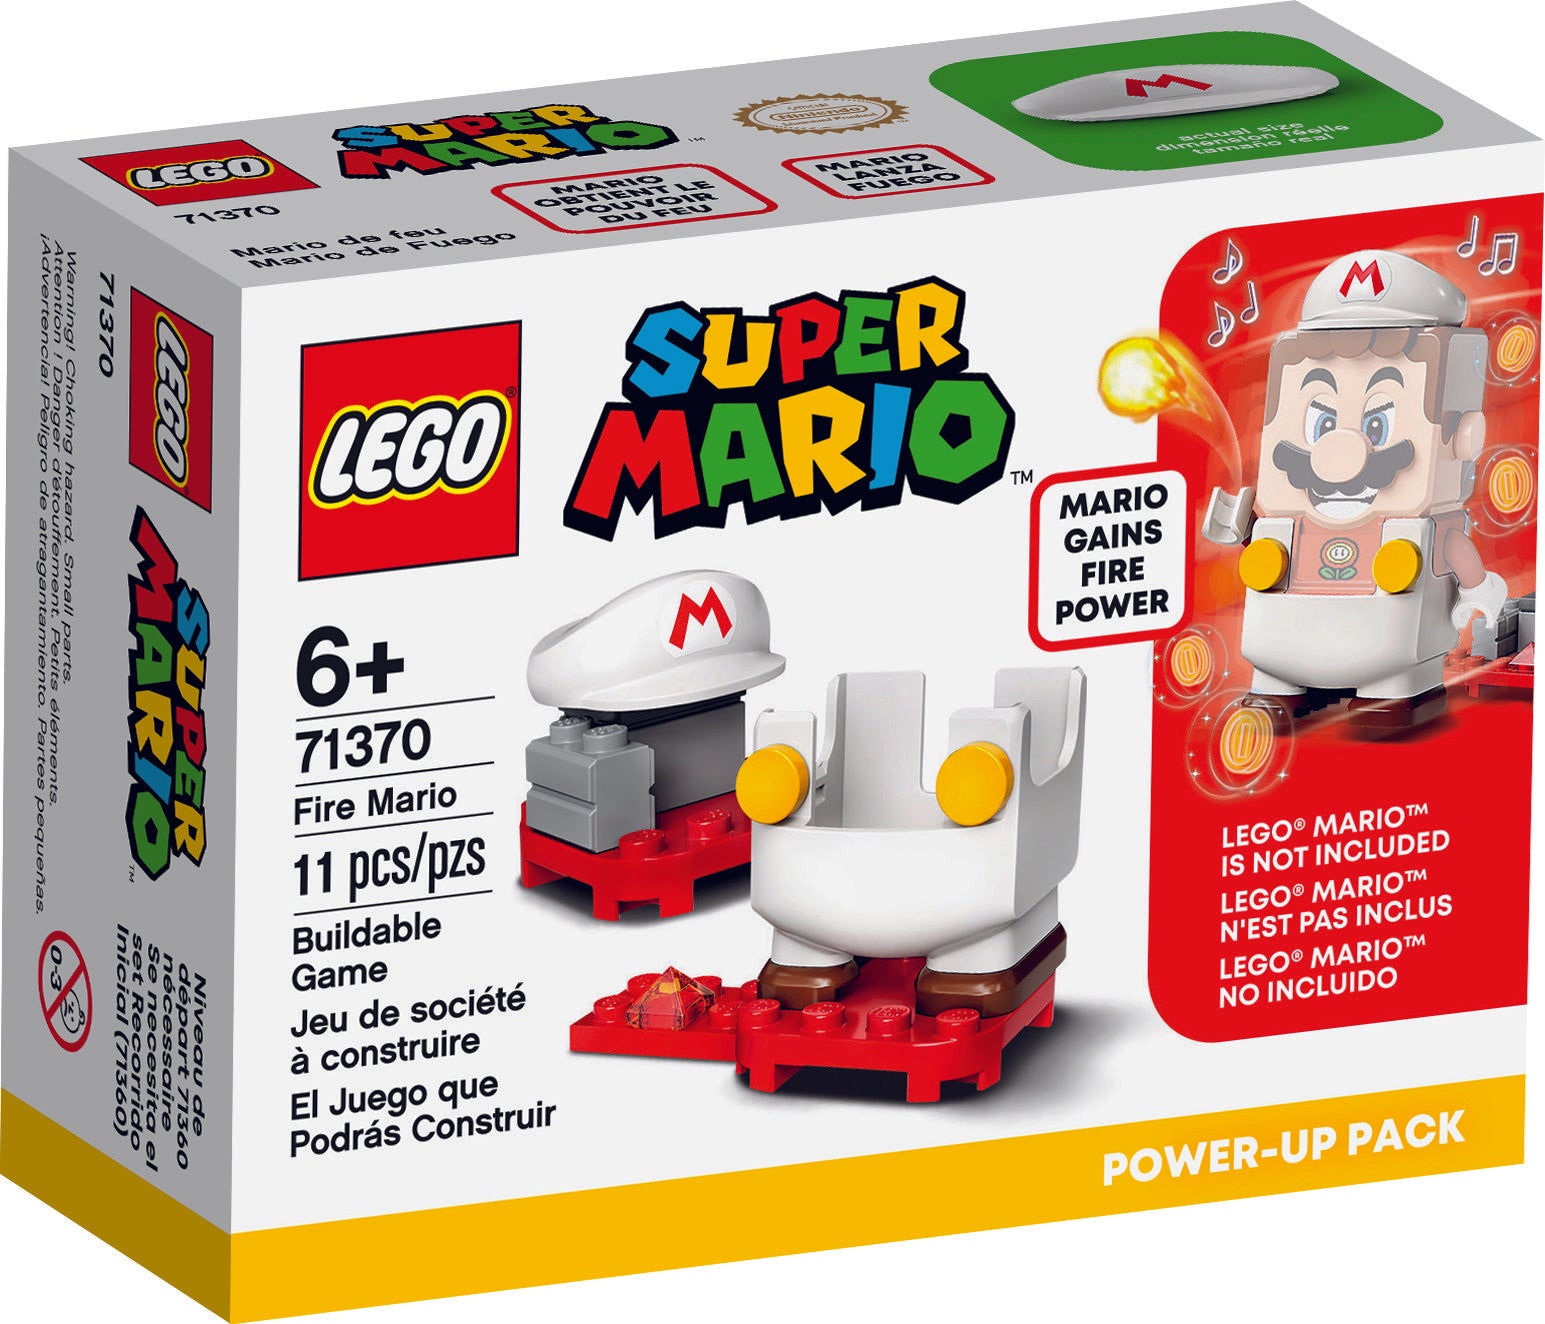 LEGO: Super Mario - Fire Mario Power-Up Pack